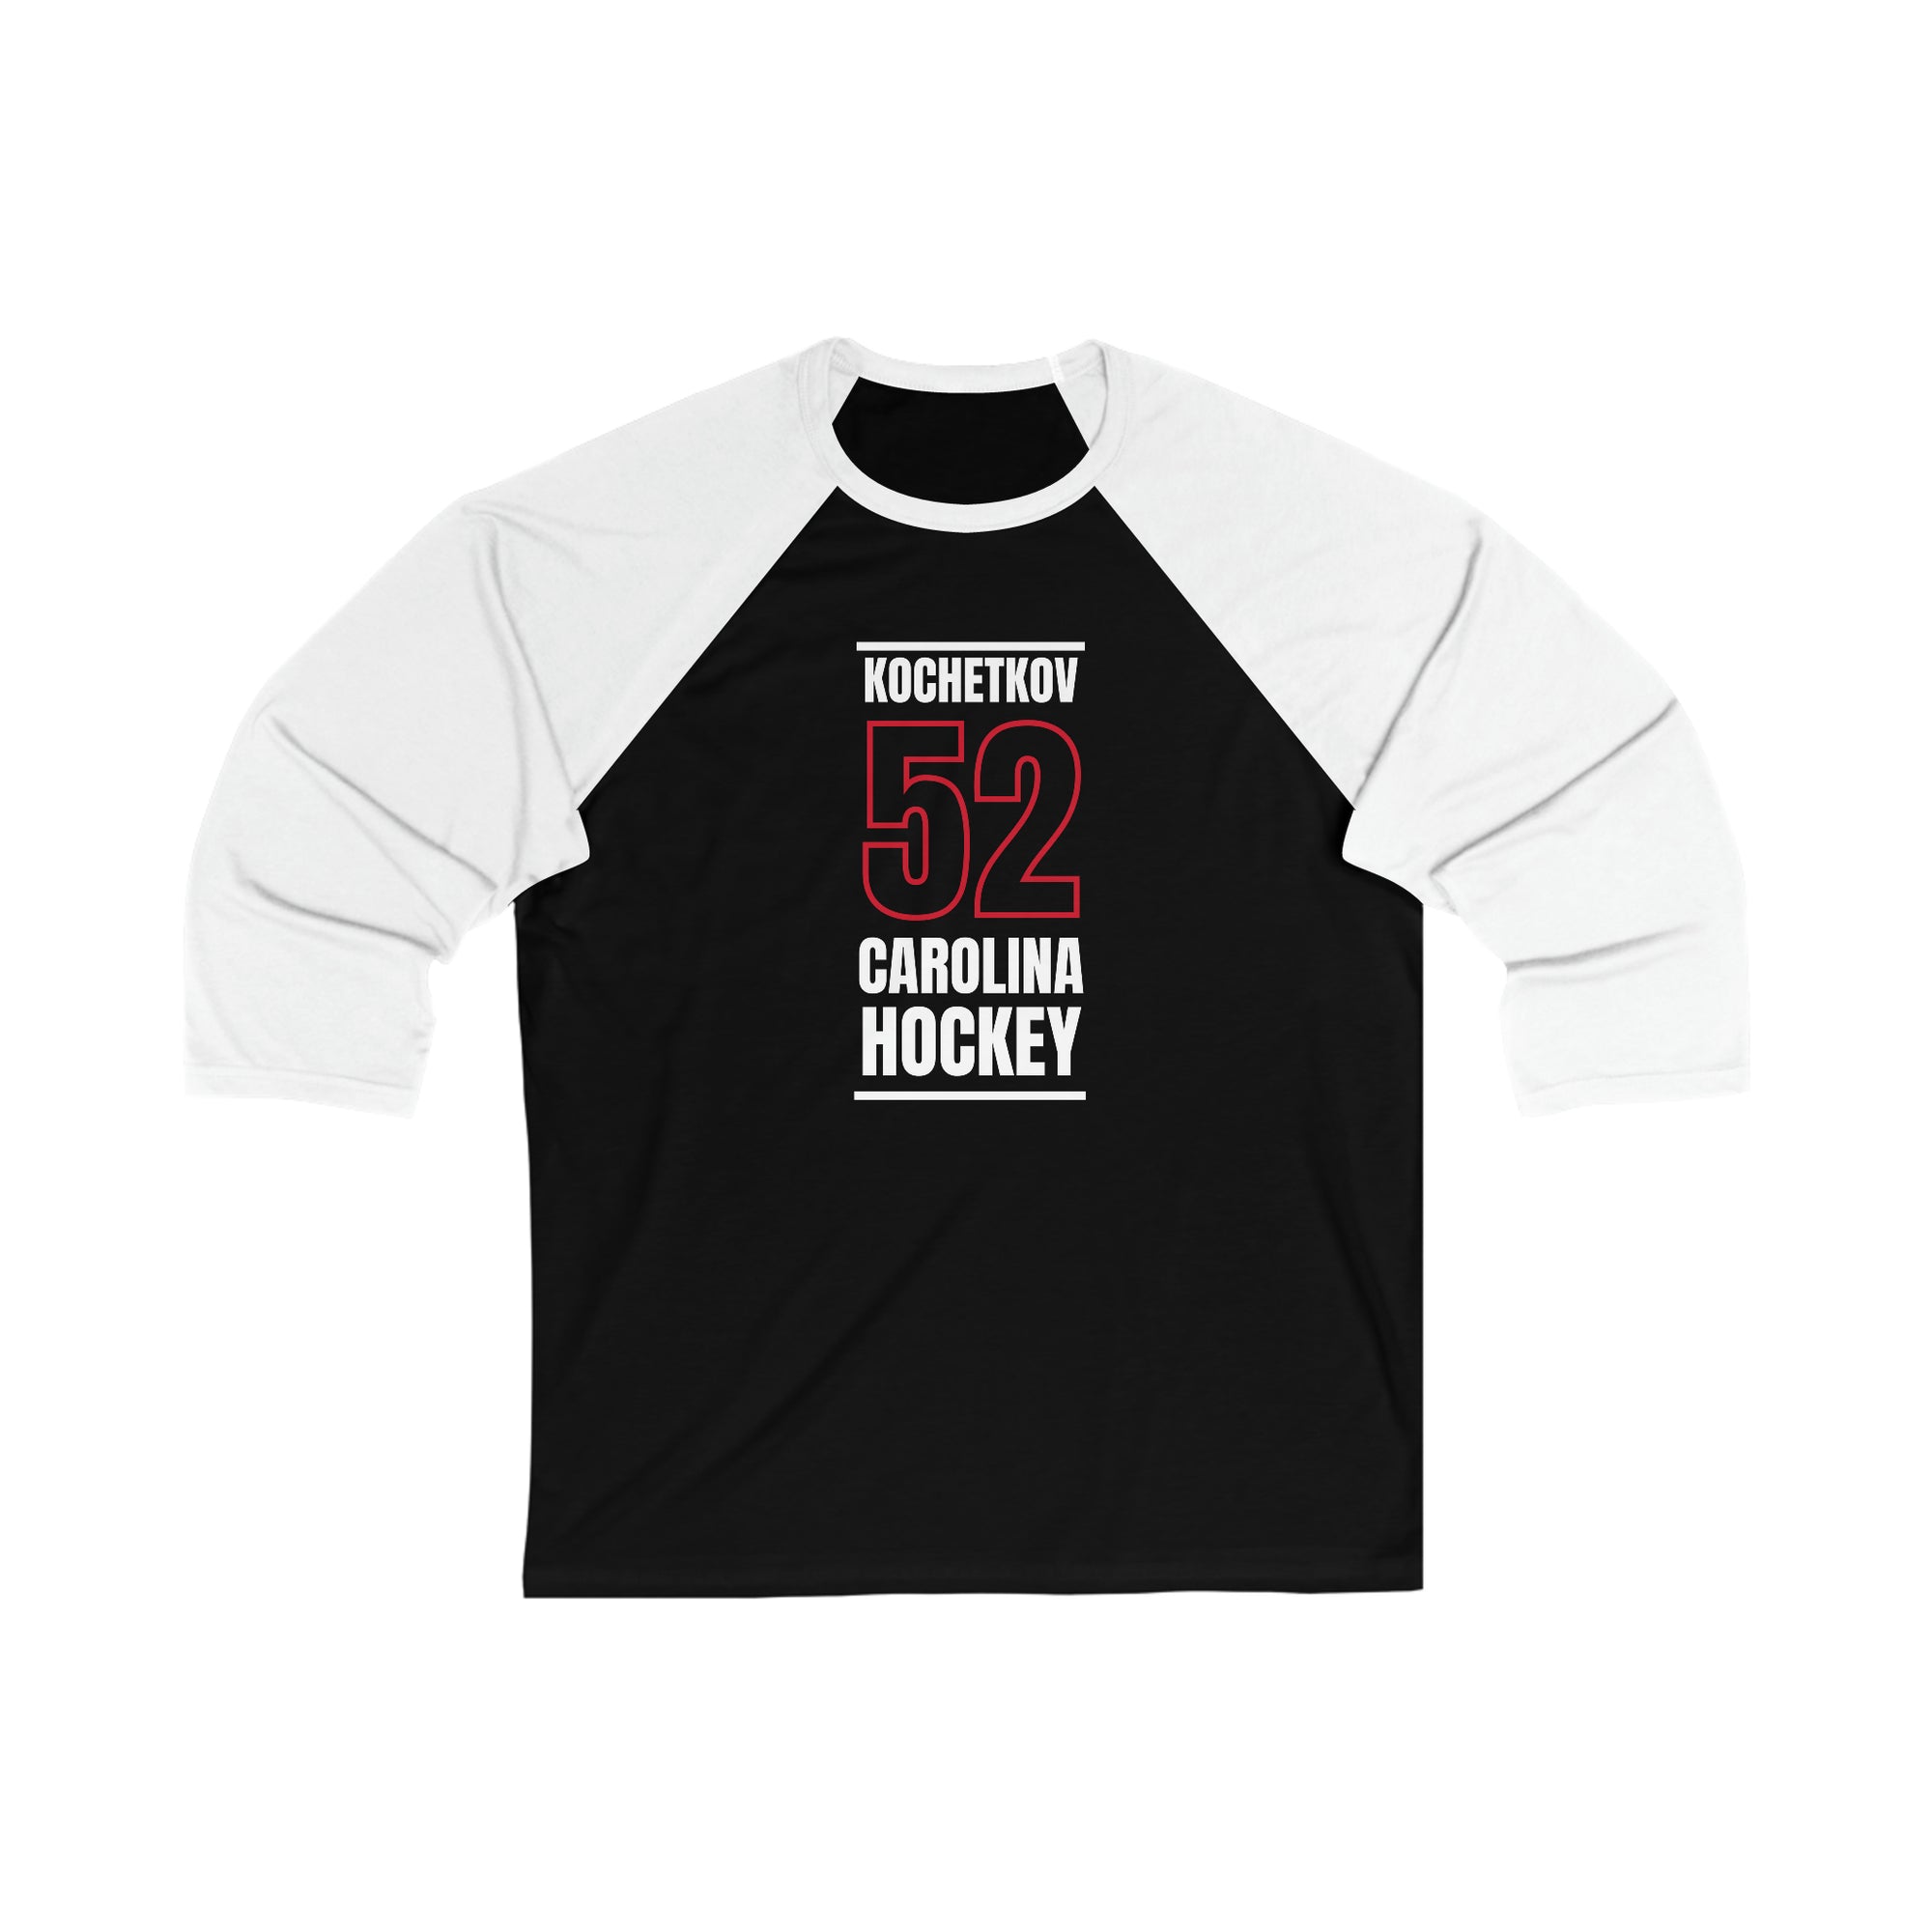 Kochetkov 52 Carolina Hockey Black Vertical Design Unisex Tri-Blend 3/4 Sleeve Raglan Baseball Shirt